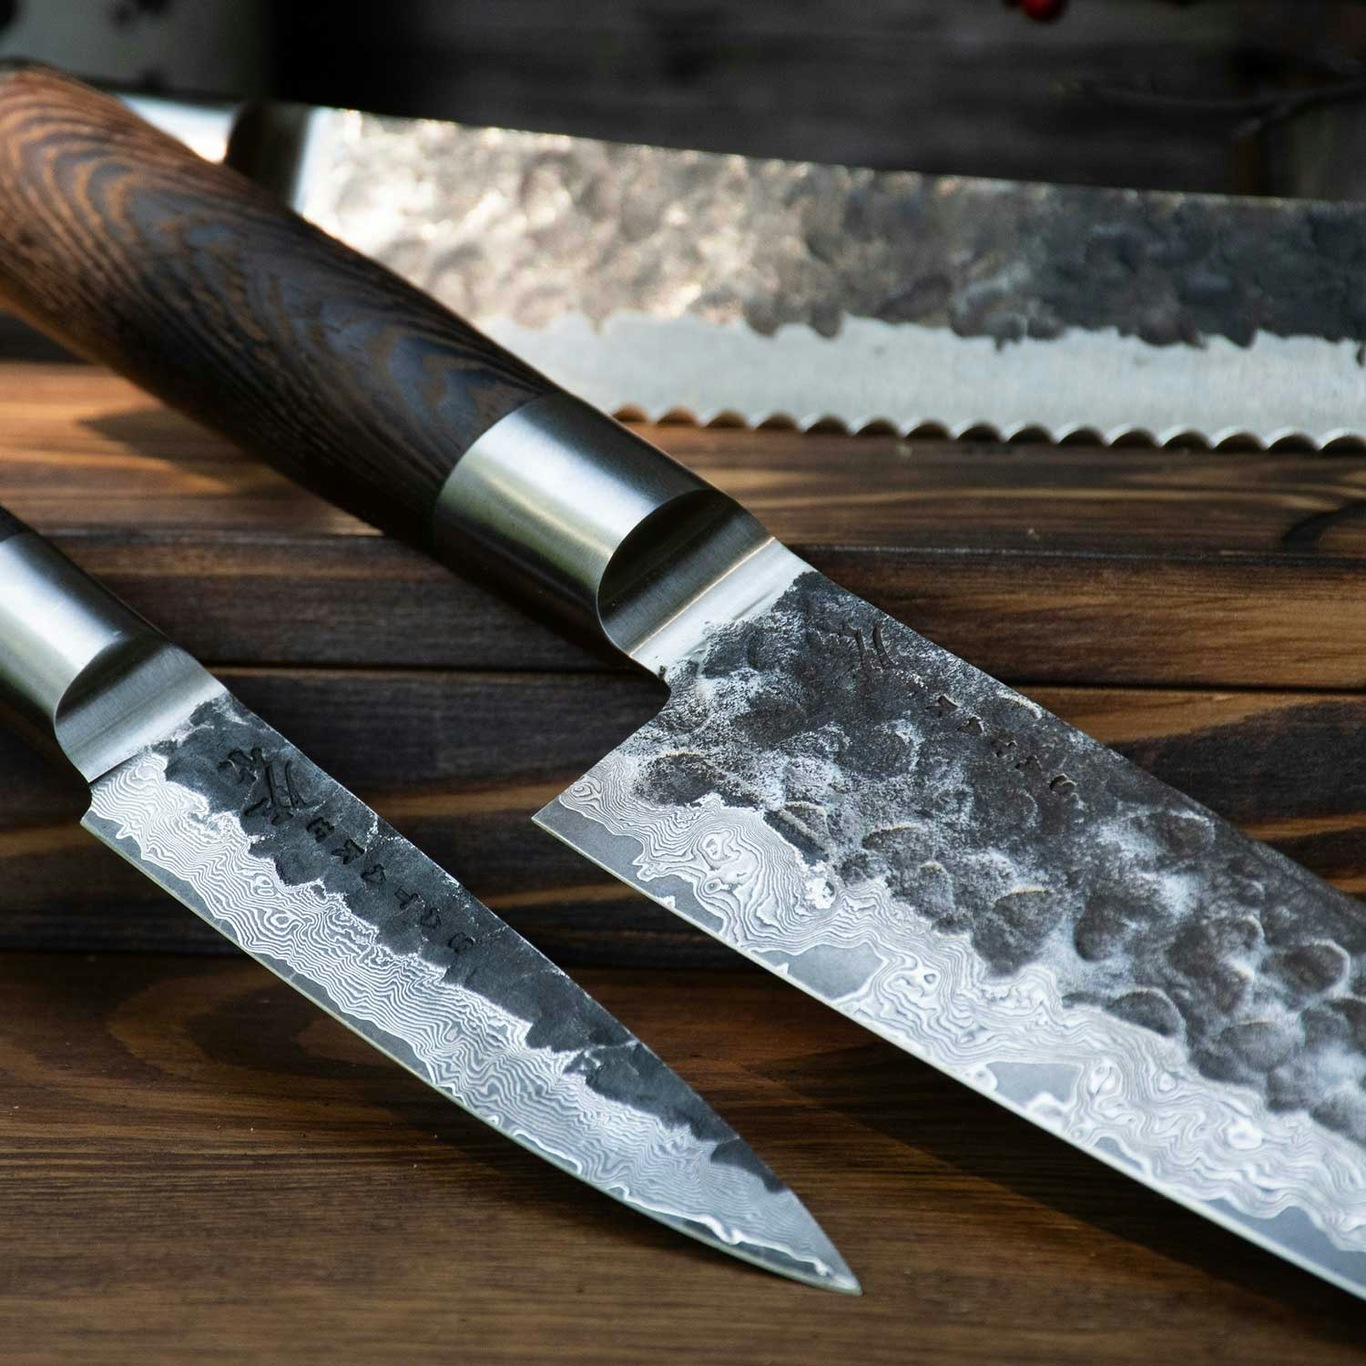 https://royaldesign.com/image/2/satake-kuro-knife-set-3-pieces-0?w=800&quality=80